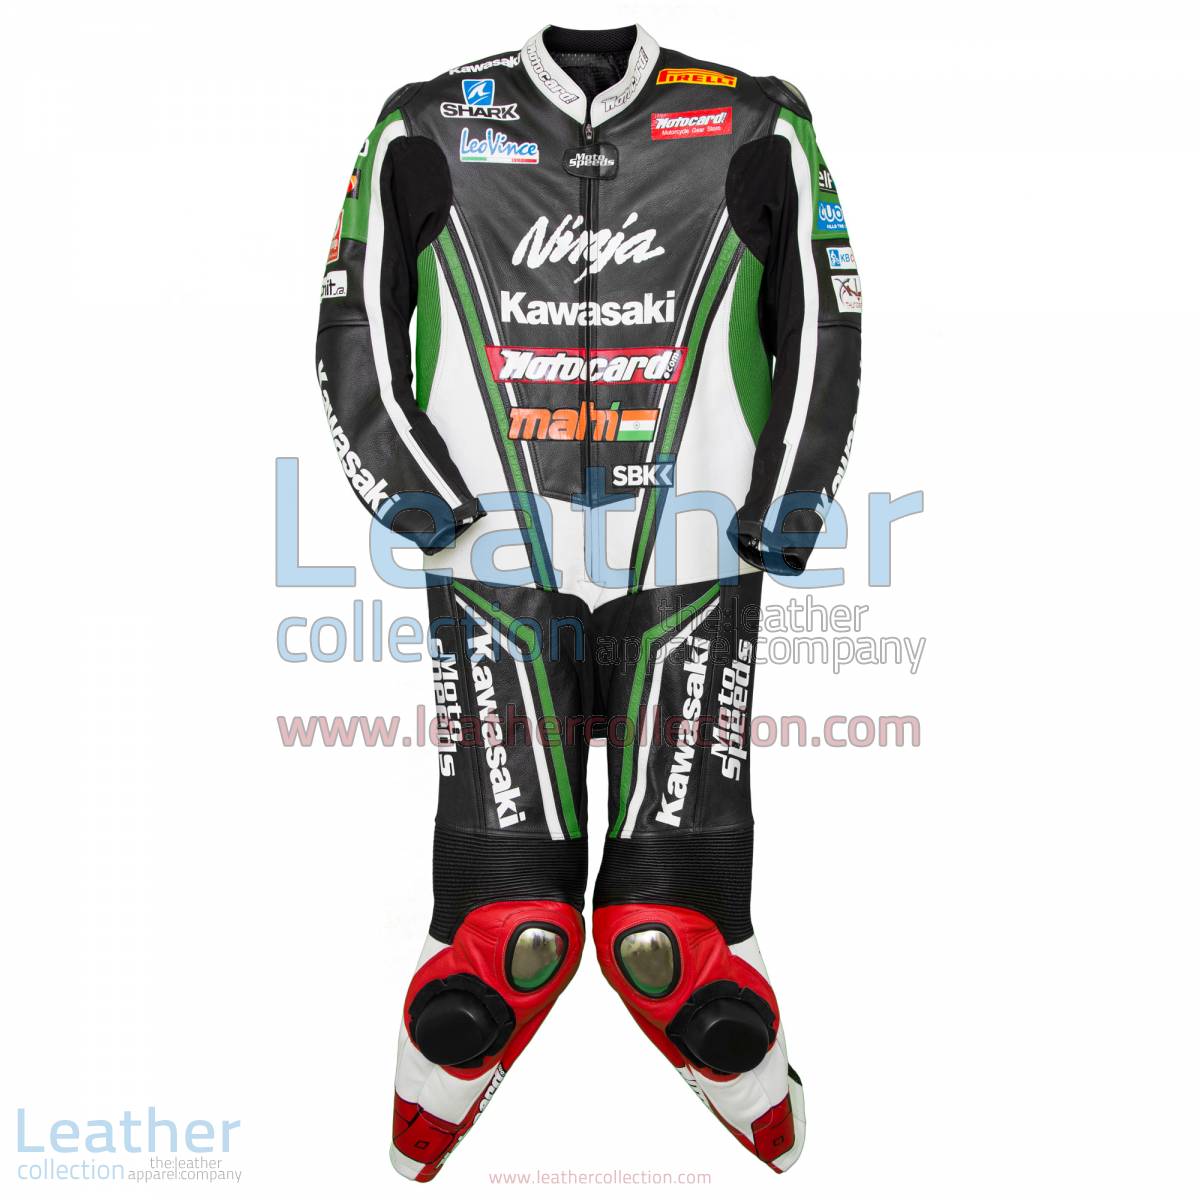 Kawasaki Ninja Tom Sykes 2013 Champion Leathers | kawasaki apparel